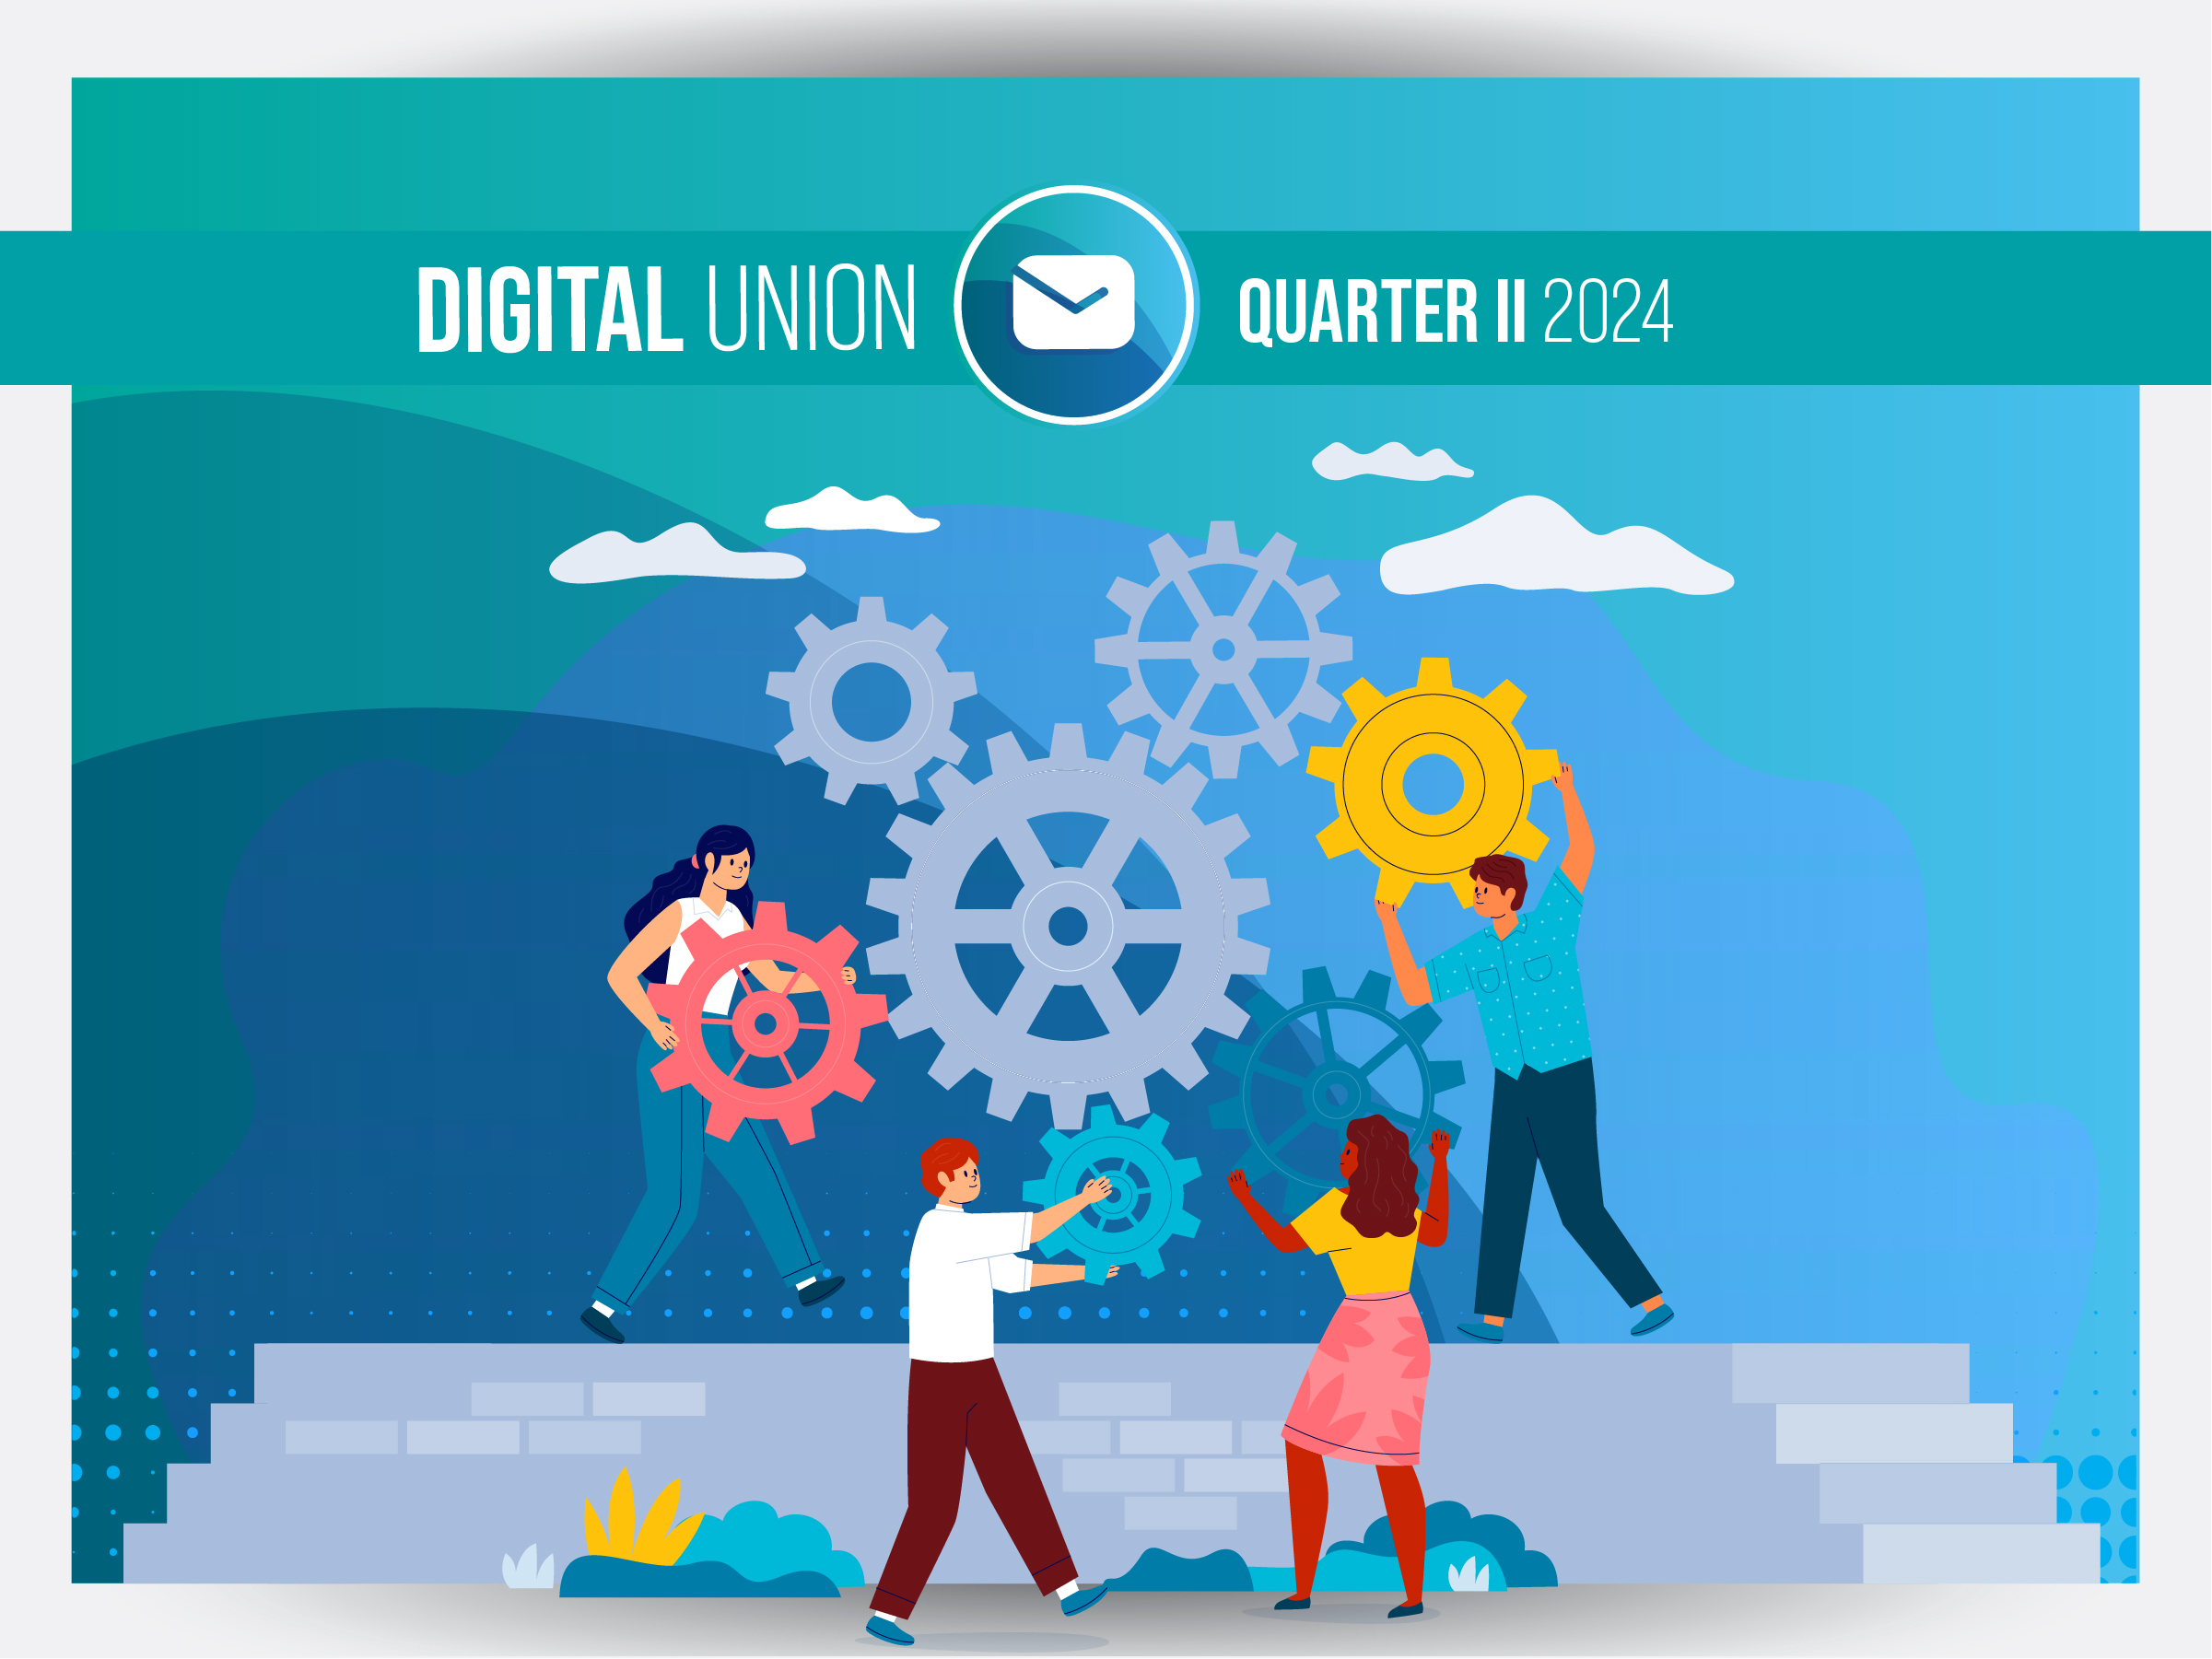 Digital Union Quarter II 2024